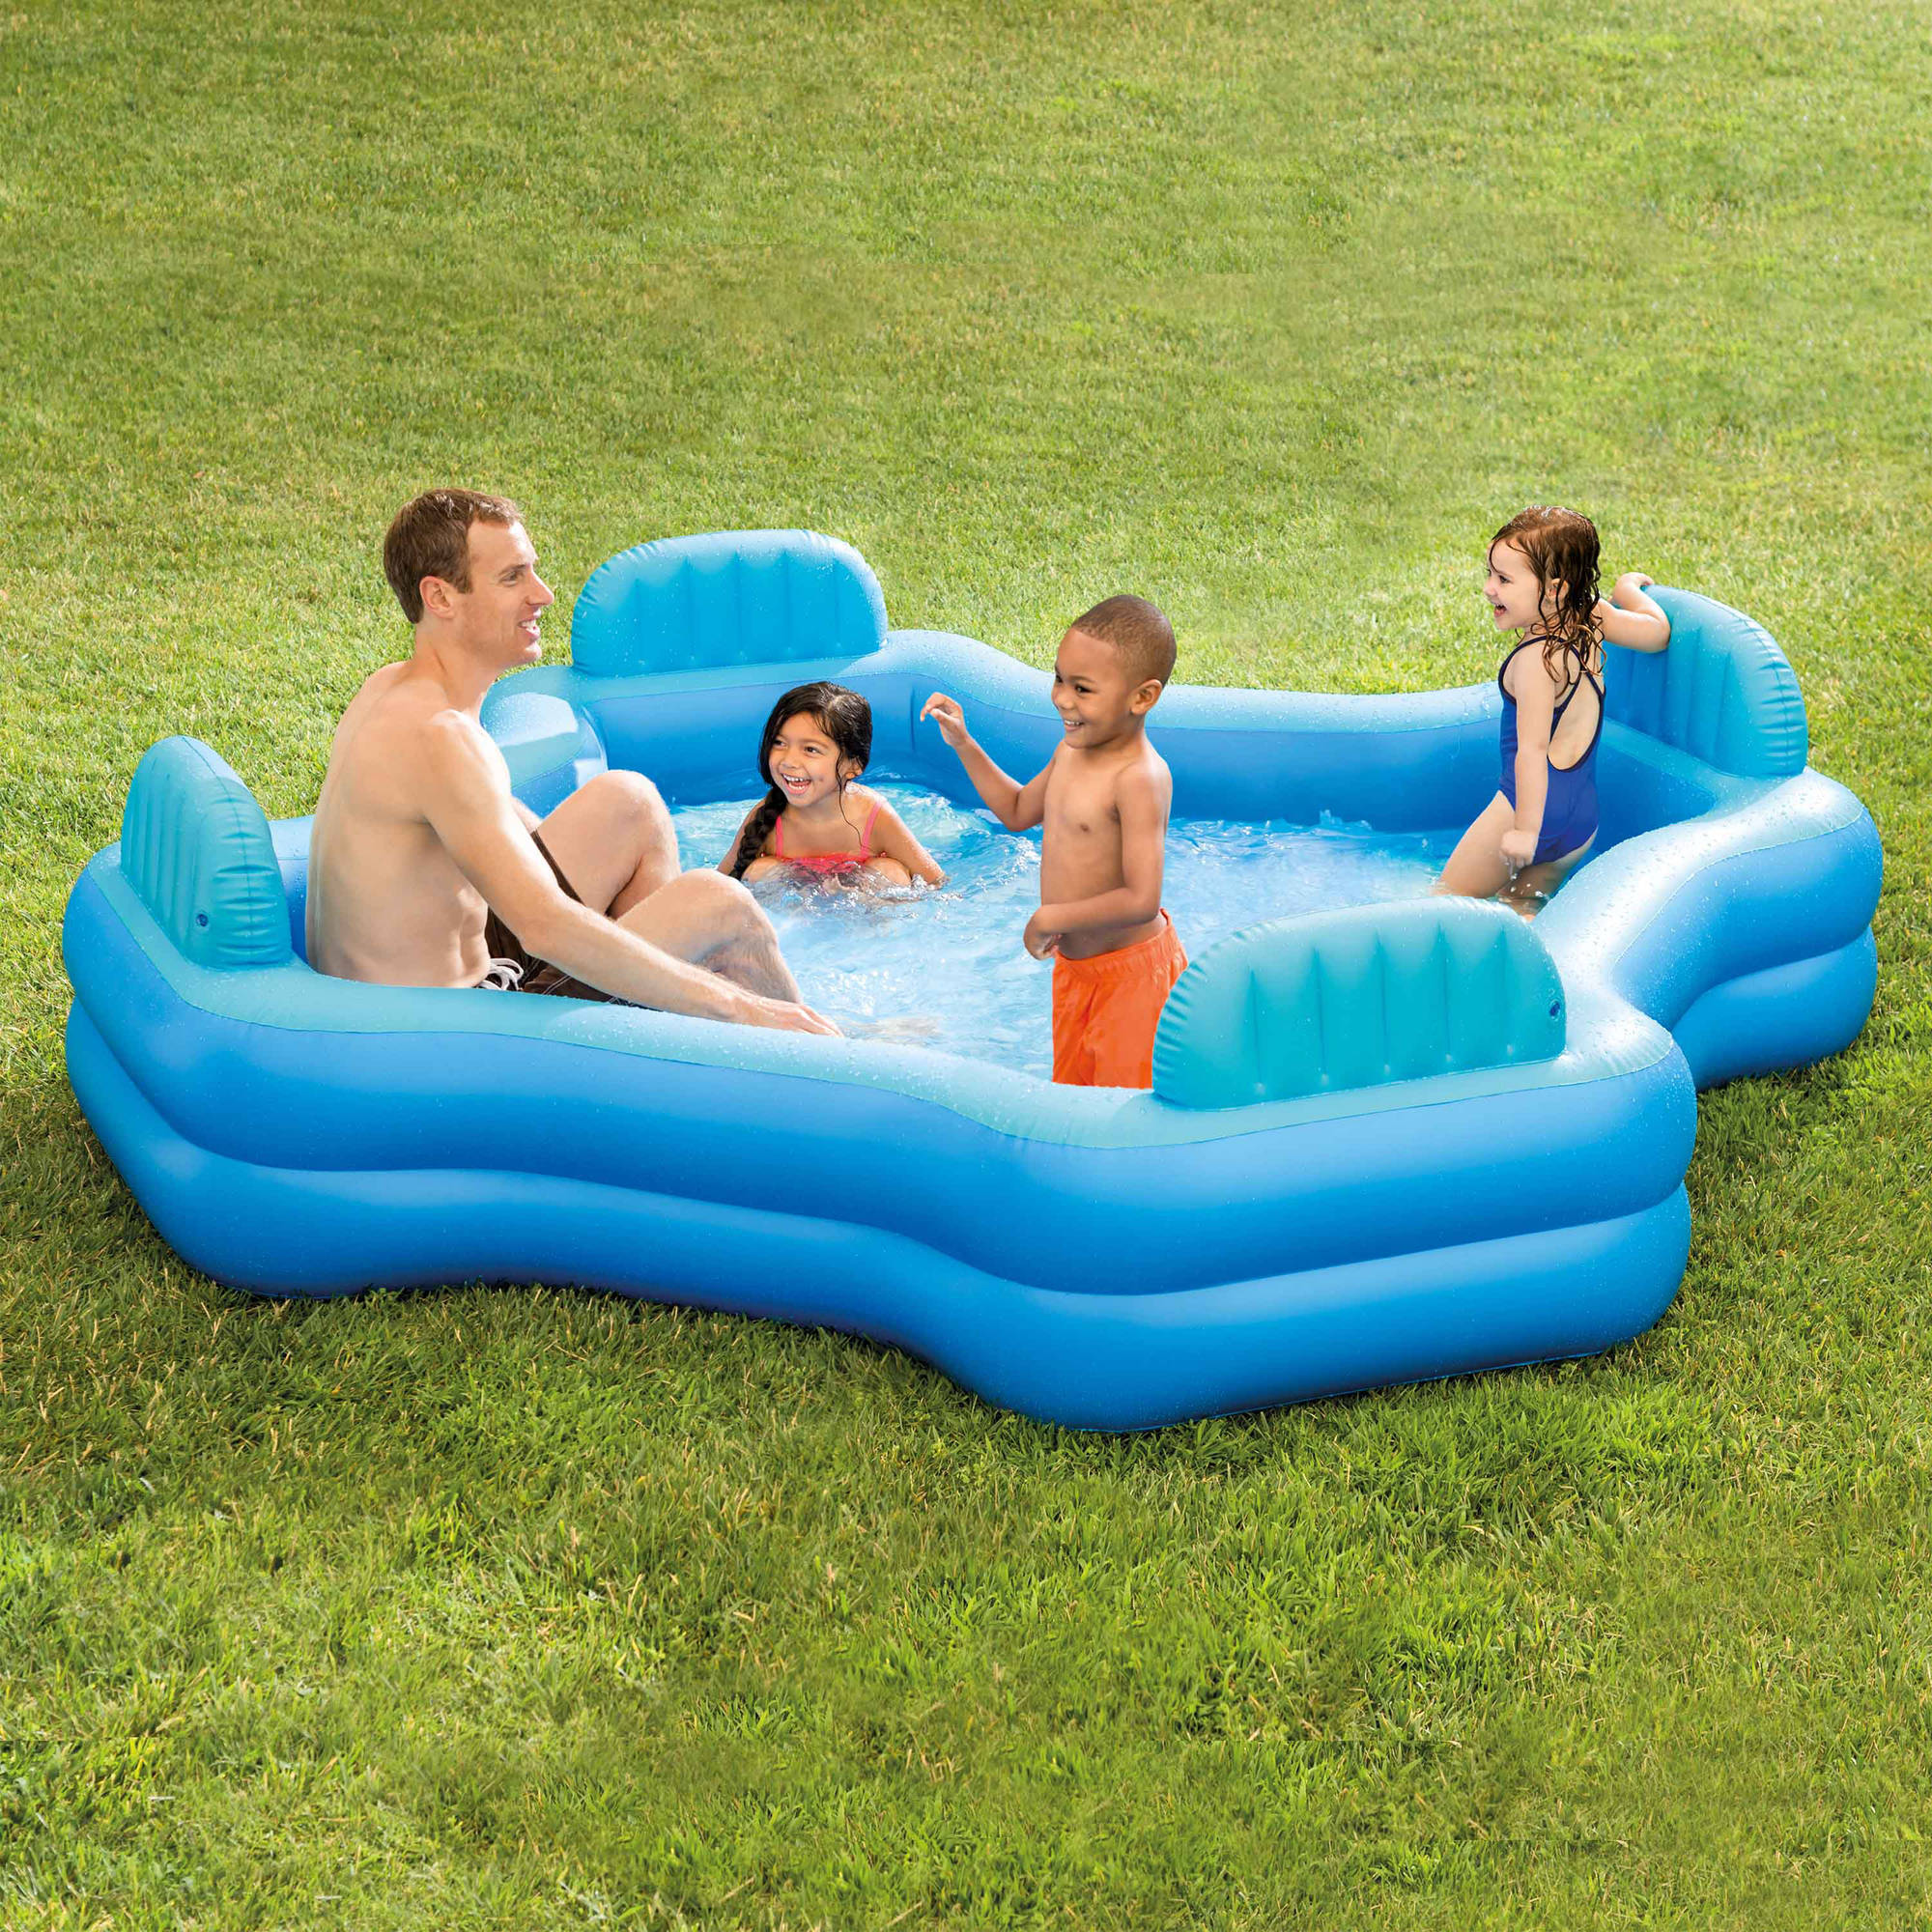 Intex Inflatable Swim Center Family Lounge Pool, 105" x 105" x 26" - image 1 of 2